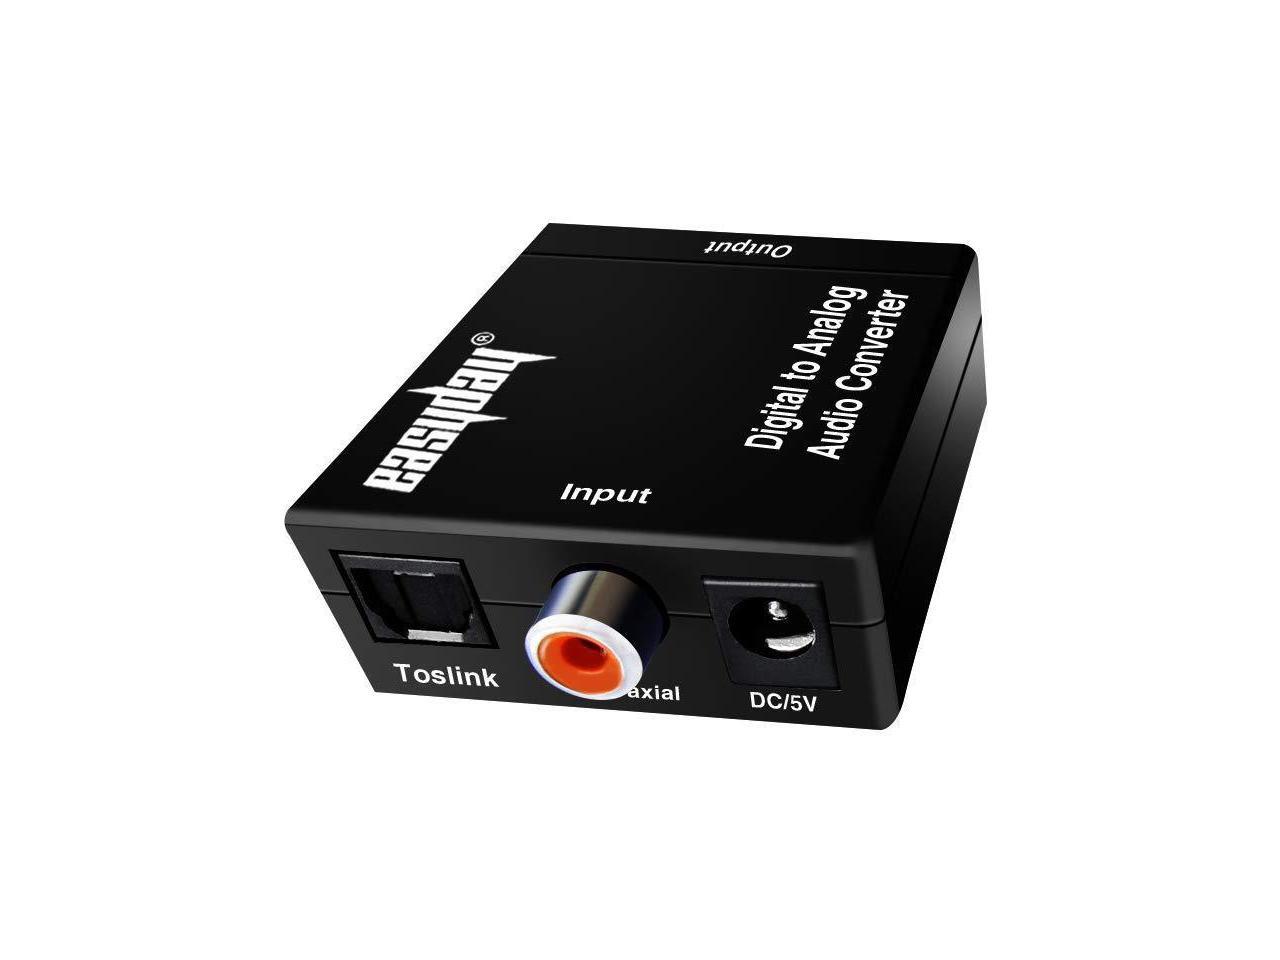 digital optical converter to analog audio